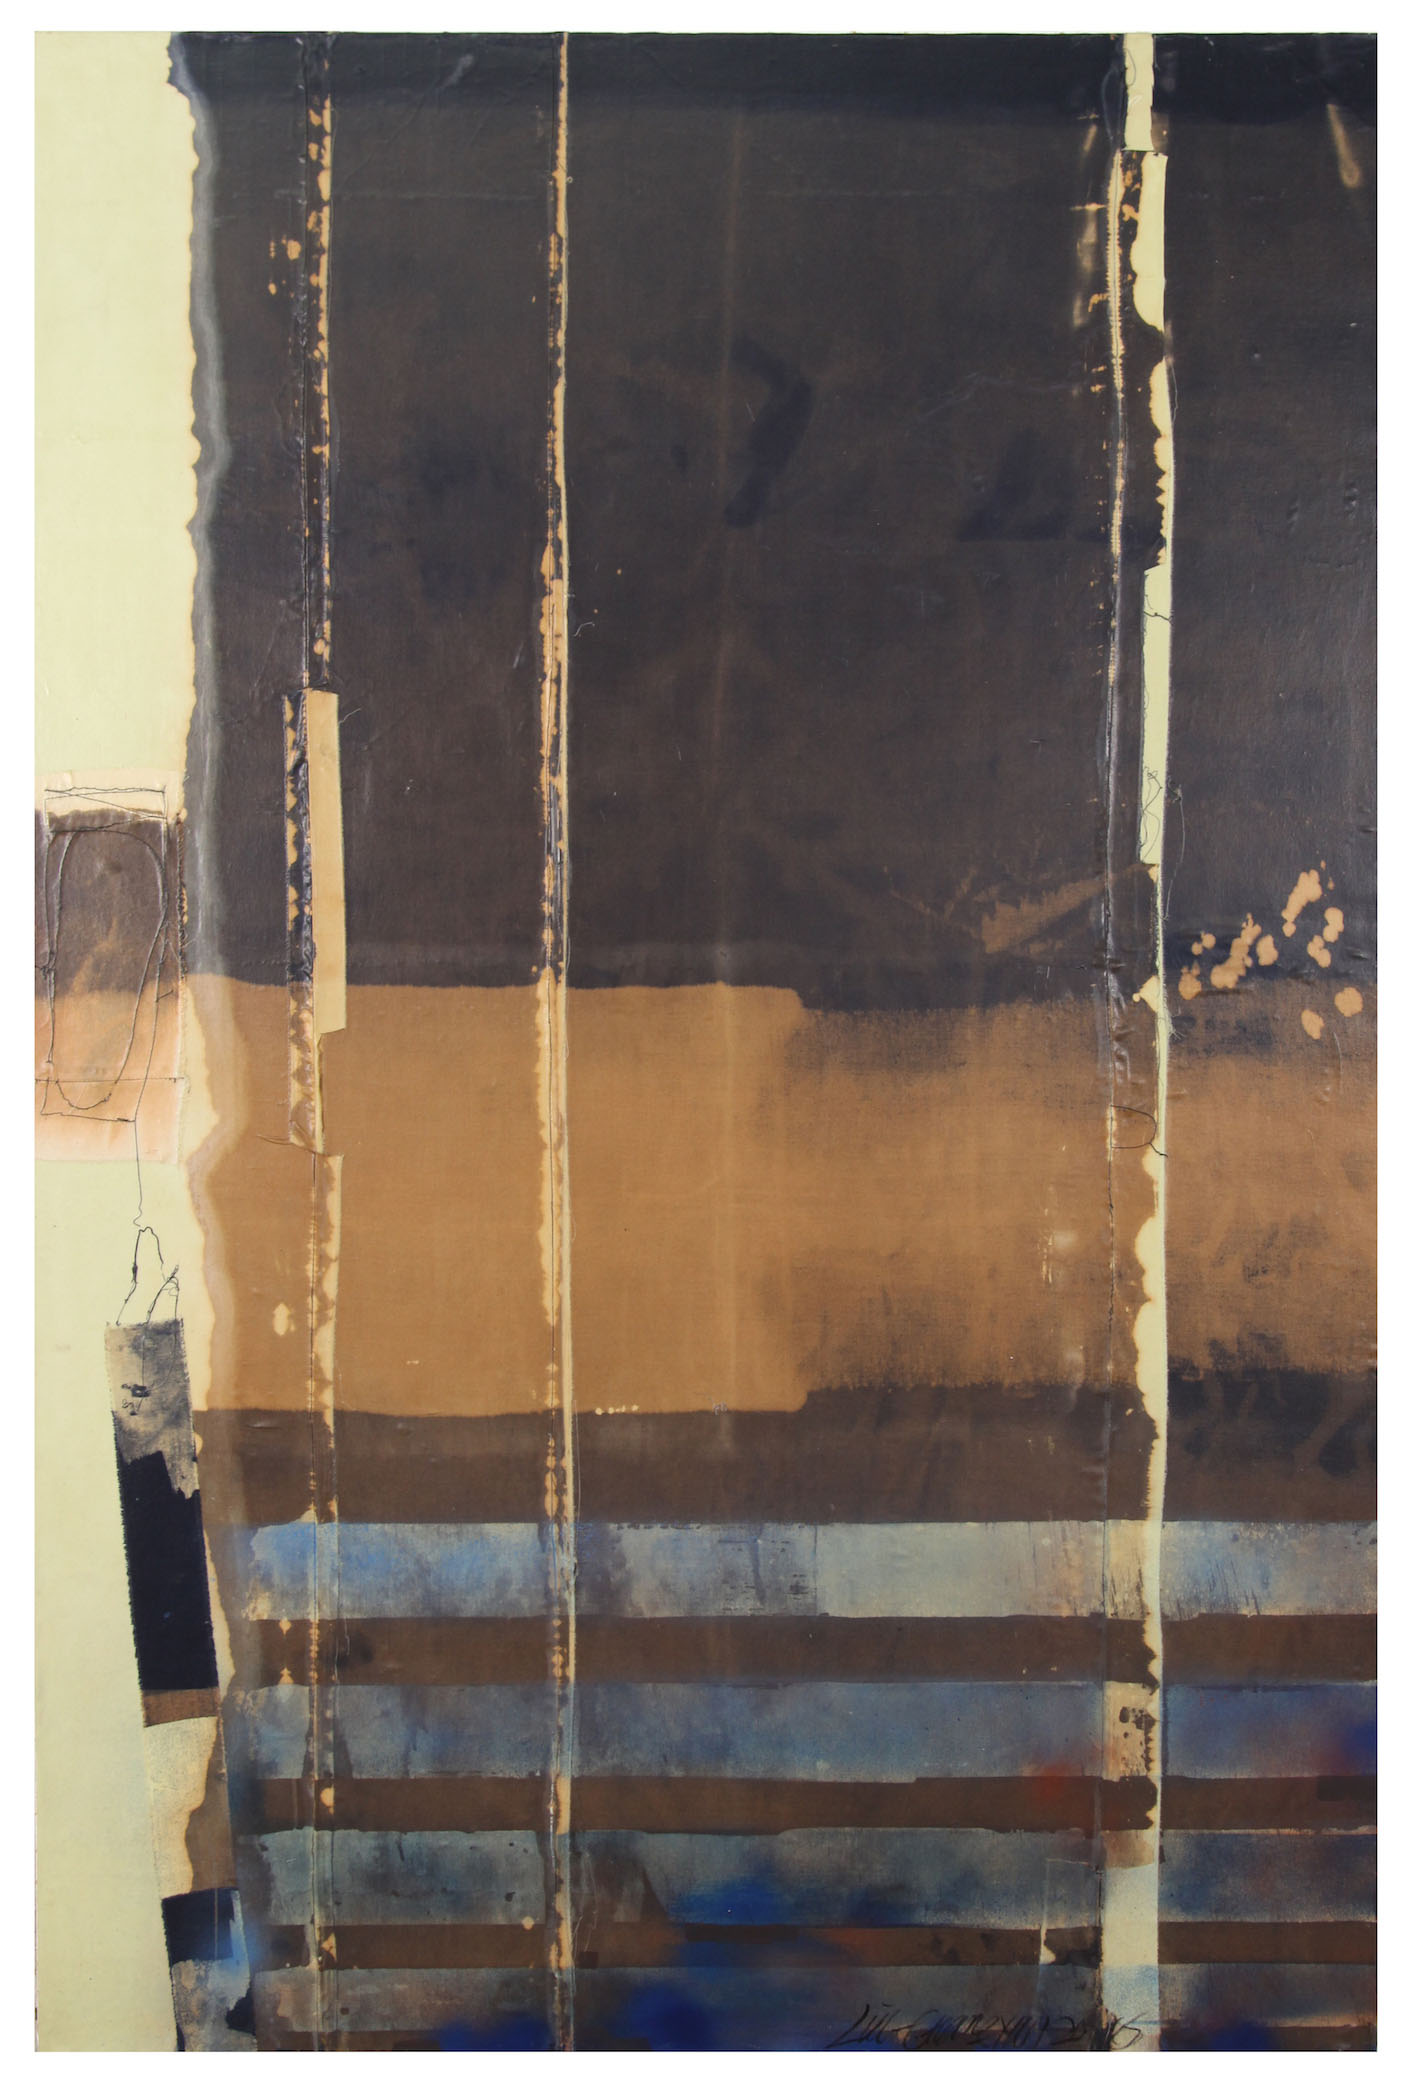 Guangyun Liu, Original Colour, 2017, 180 x 120 x 10 cm